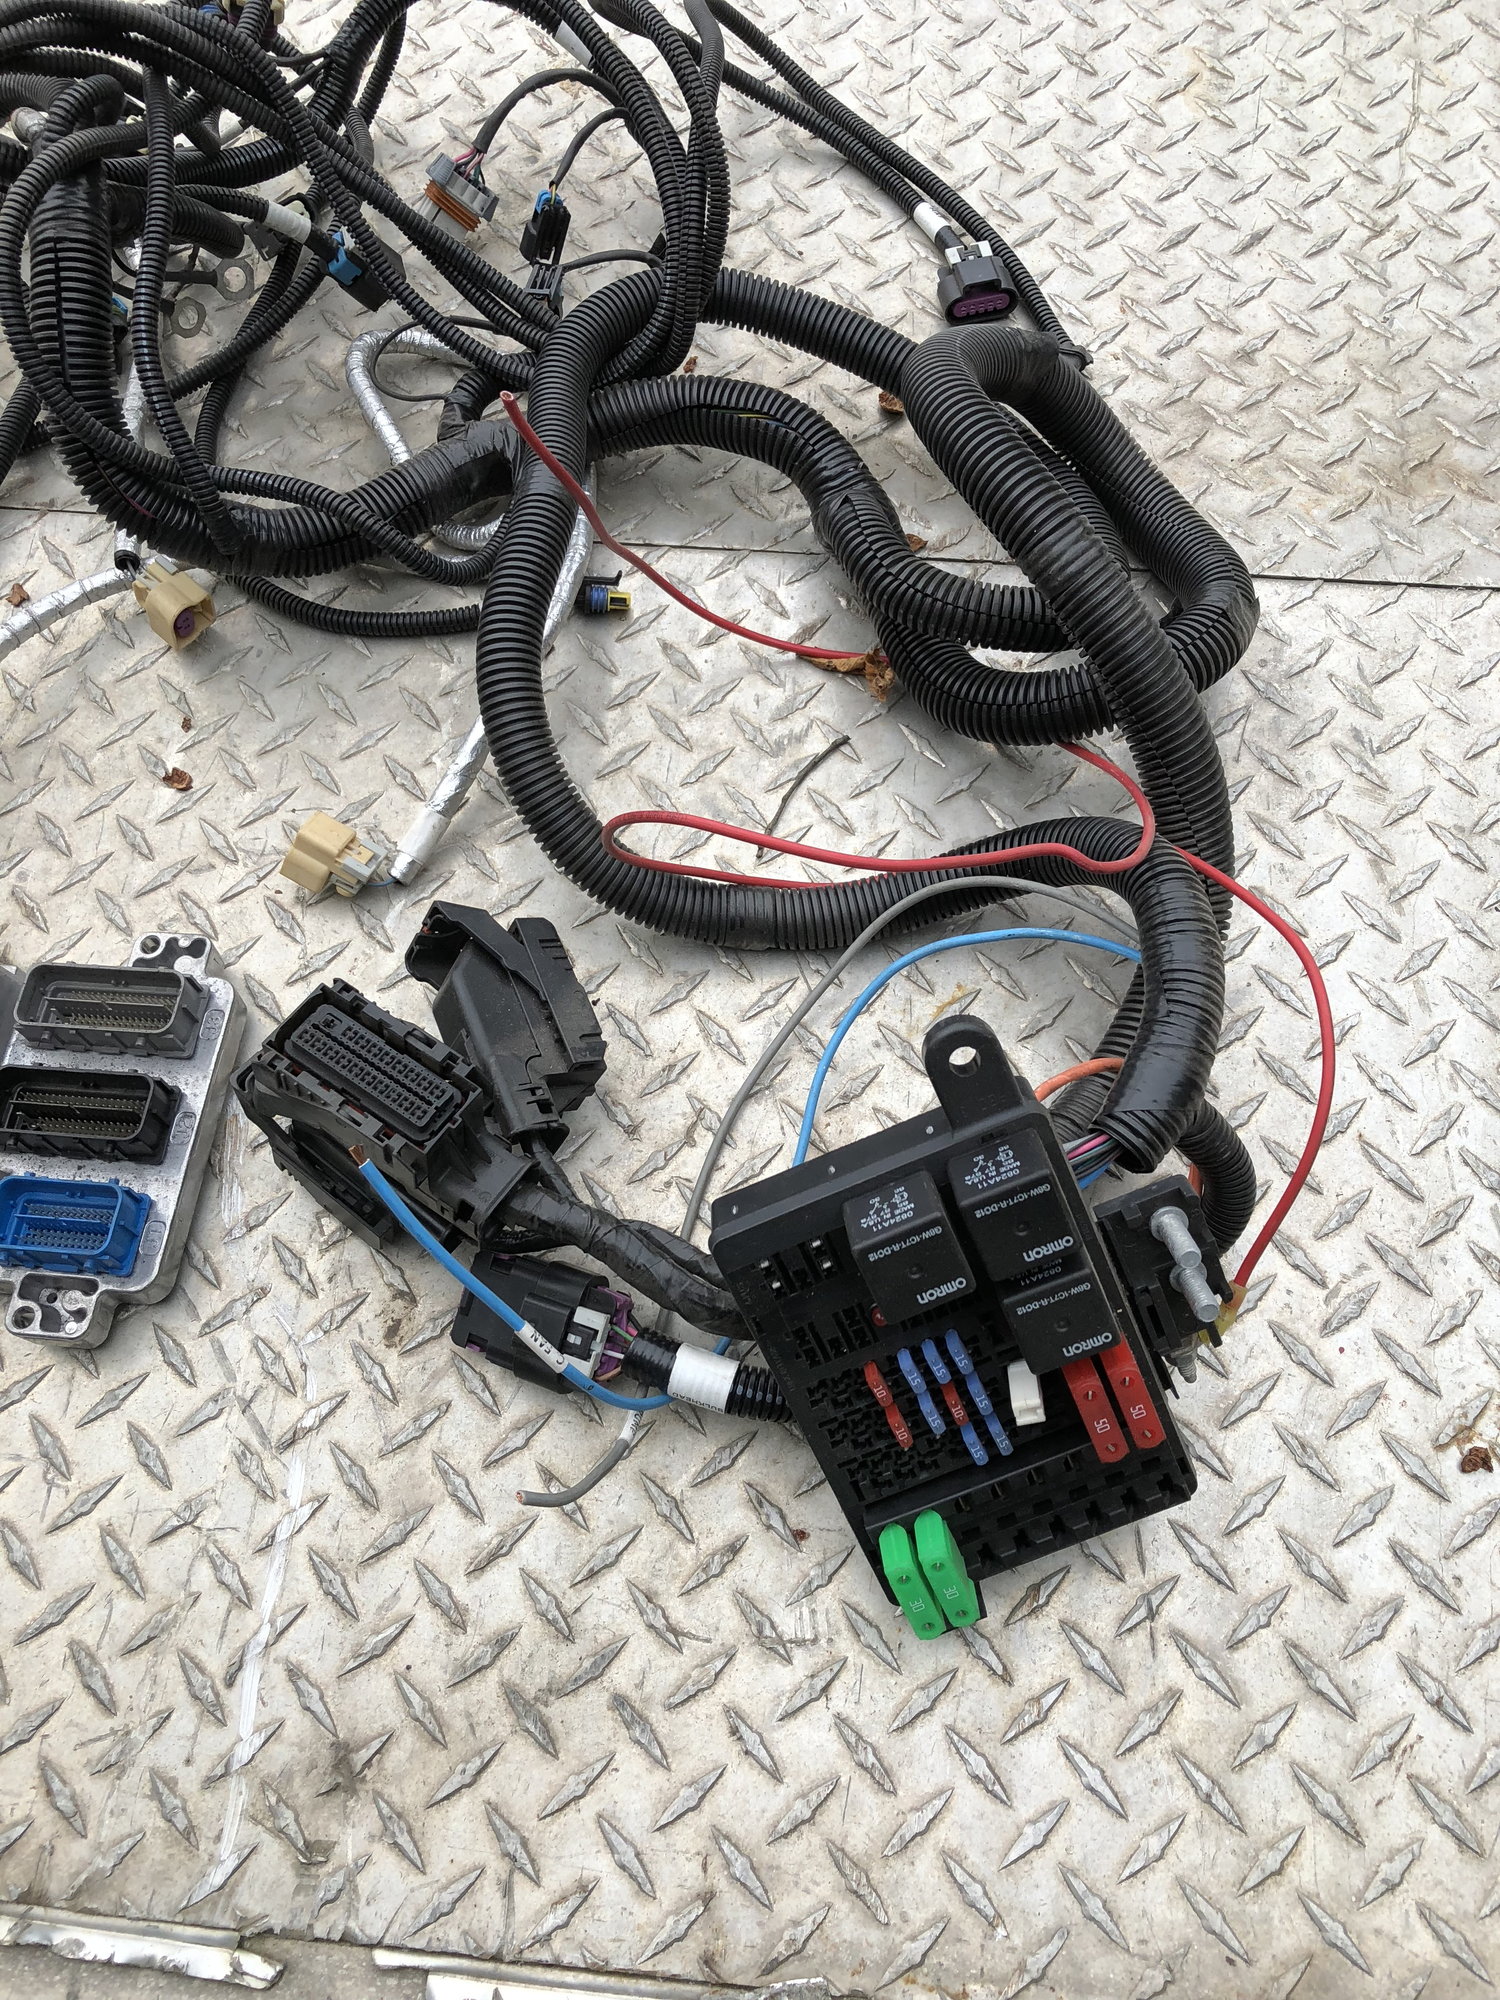  - GMPP LS3/hotrod swap wiring harness & ECU - Hinesburg, VT 05461, United States